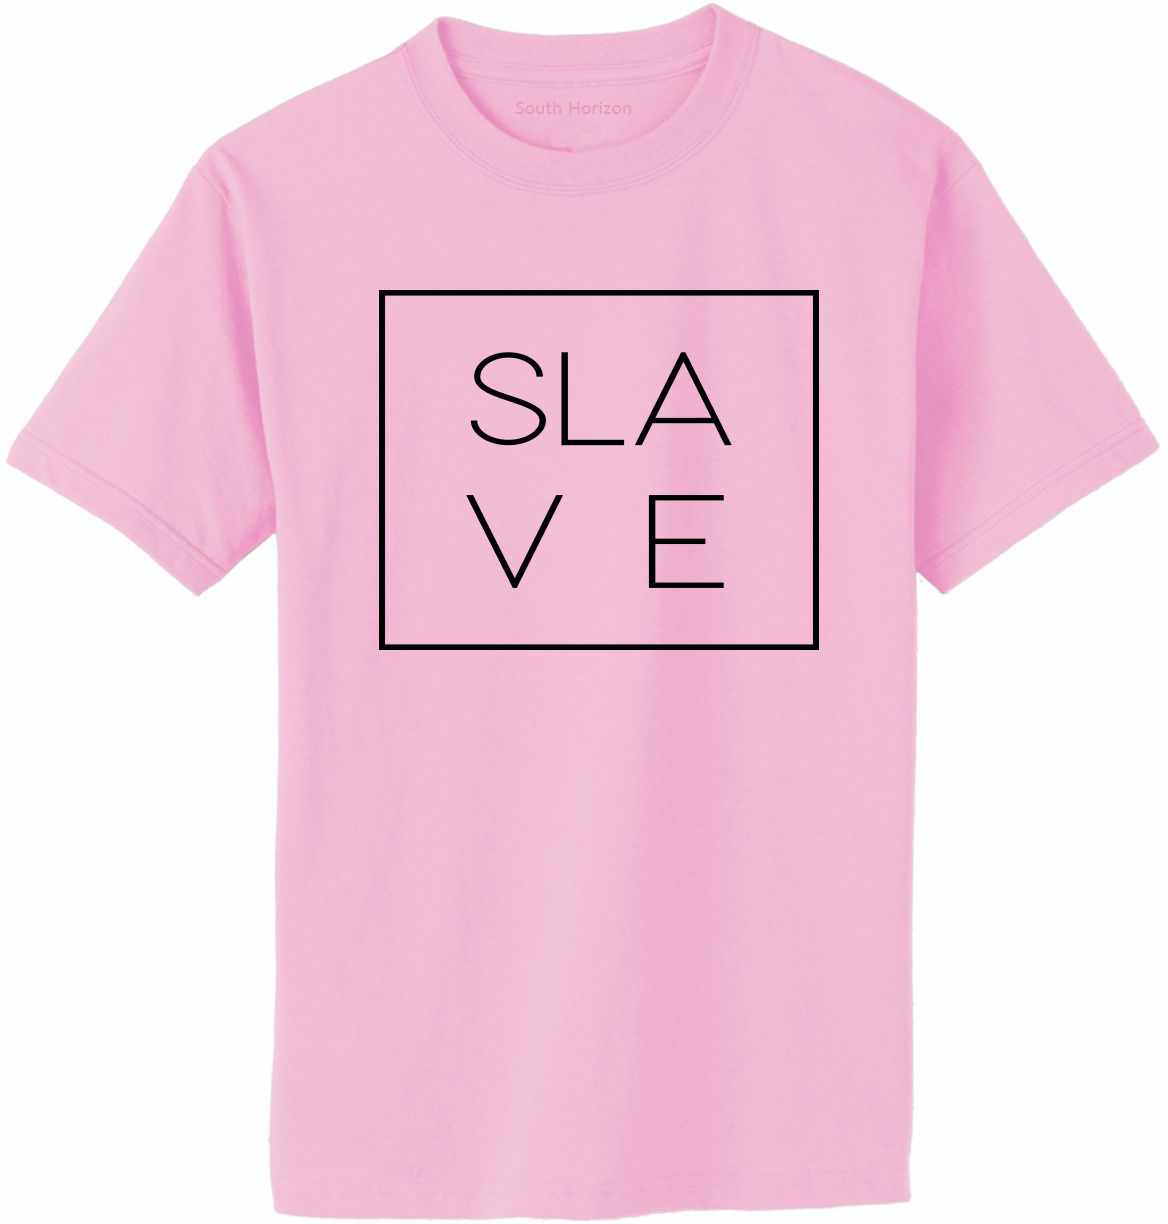 SLAVE on Adult T-Shirt (#1324-1)